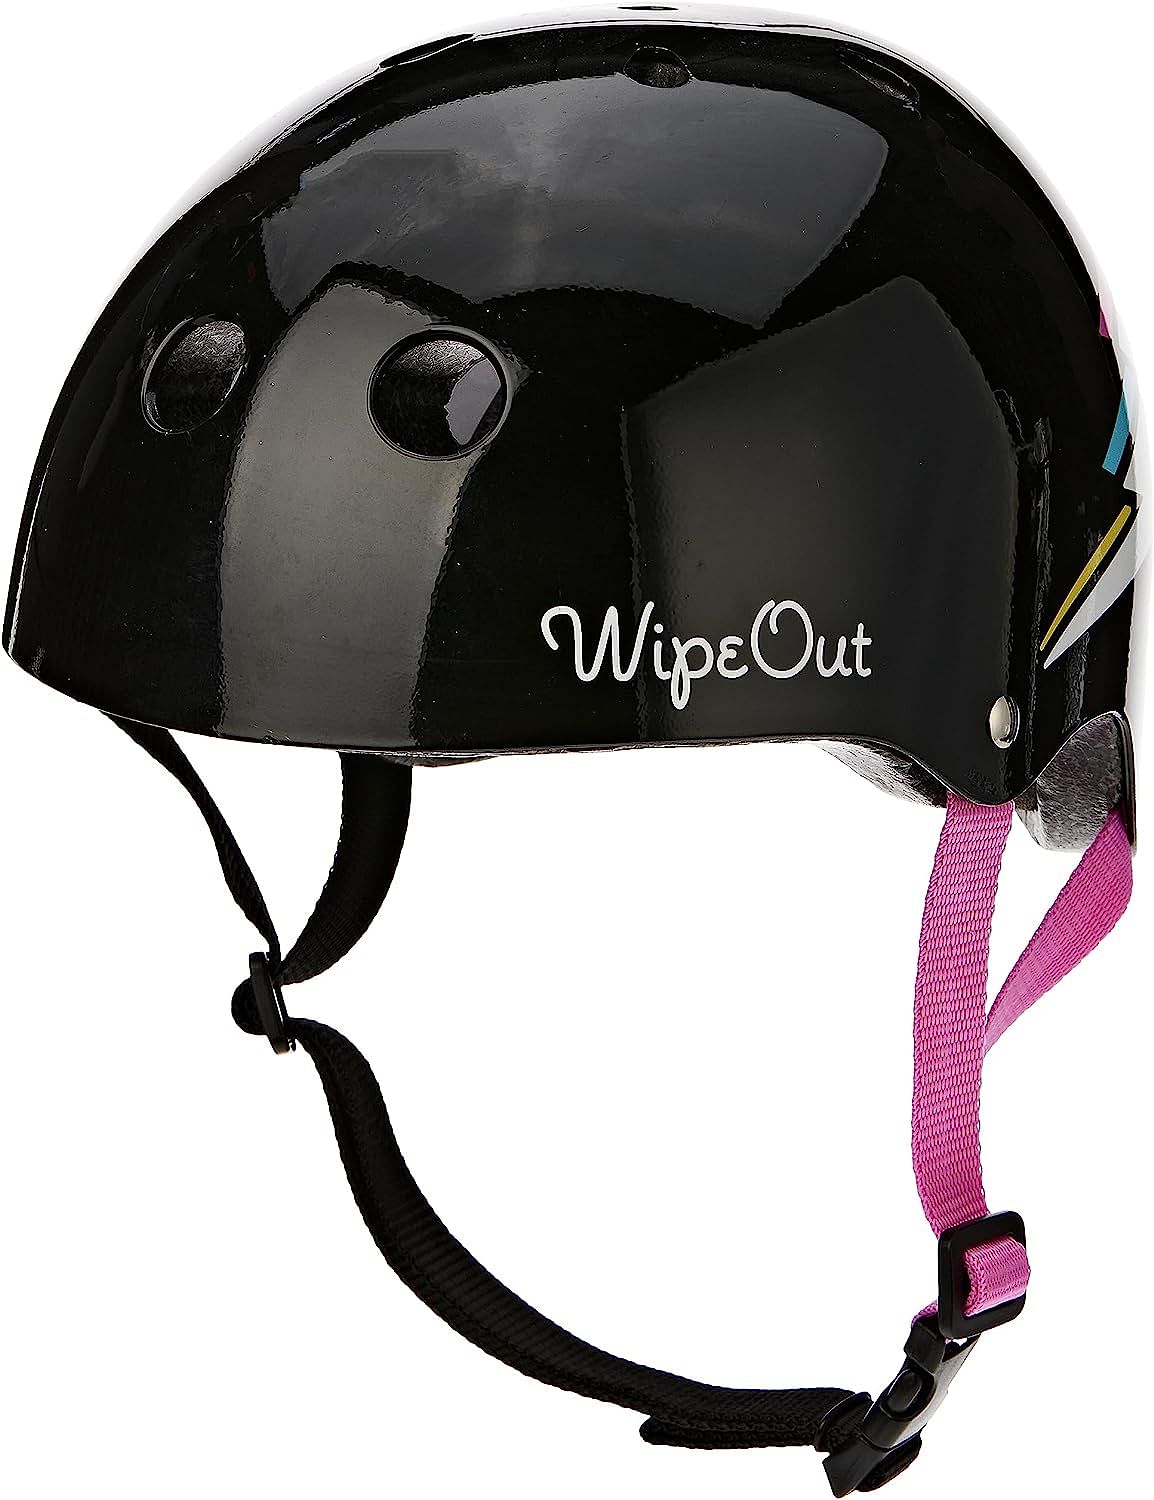 Wipeout Helmet for 8+ Age Kids, Black Bolt